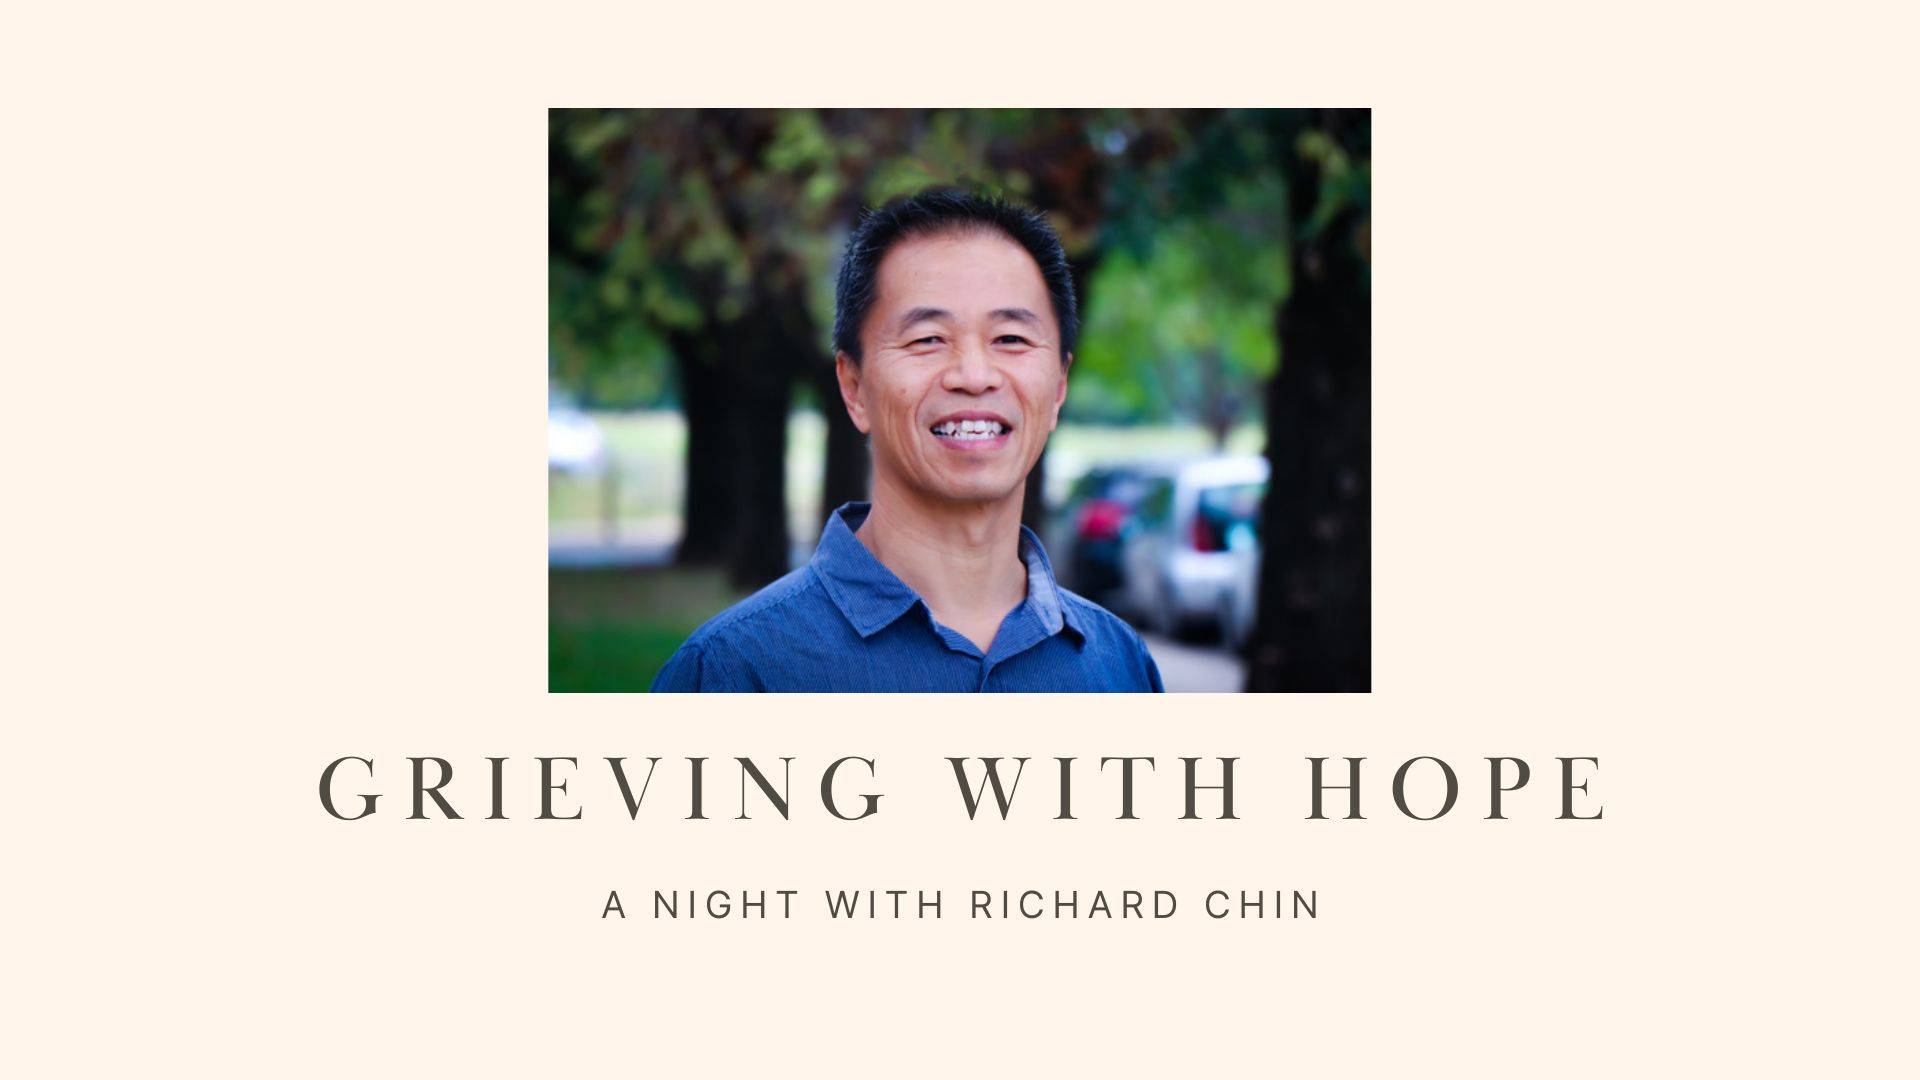 Speaker, Richard Chin